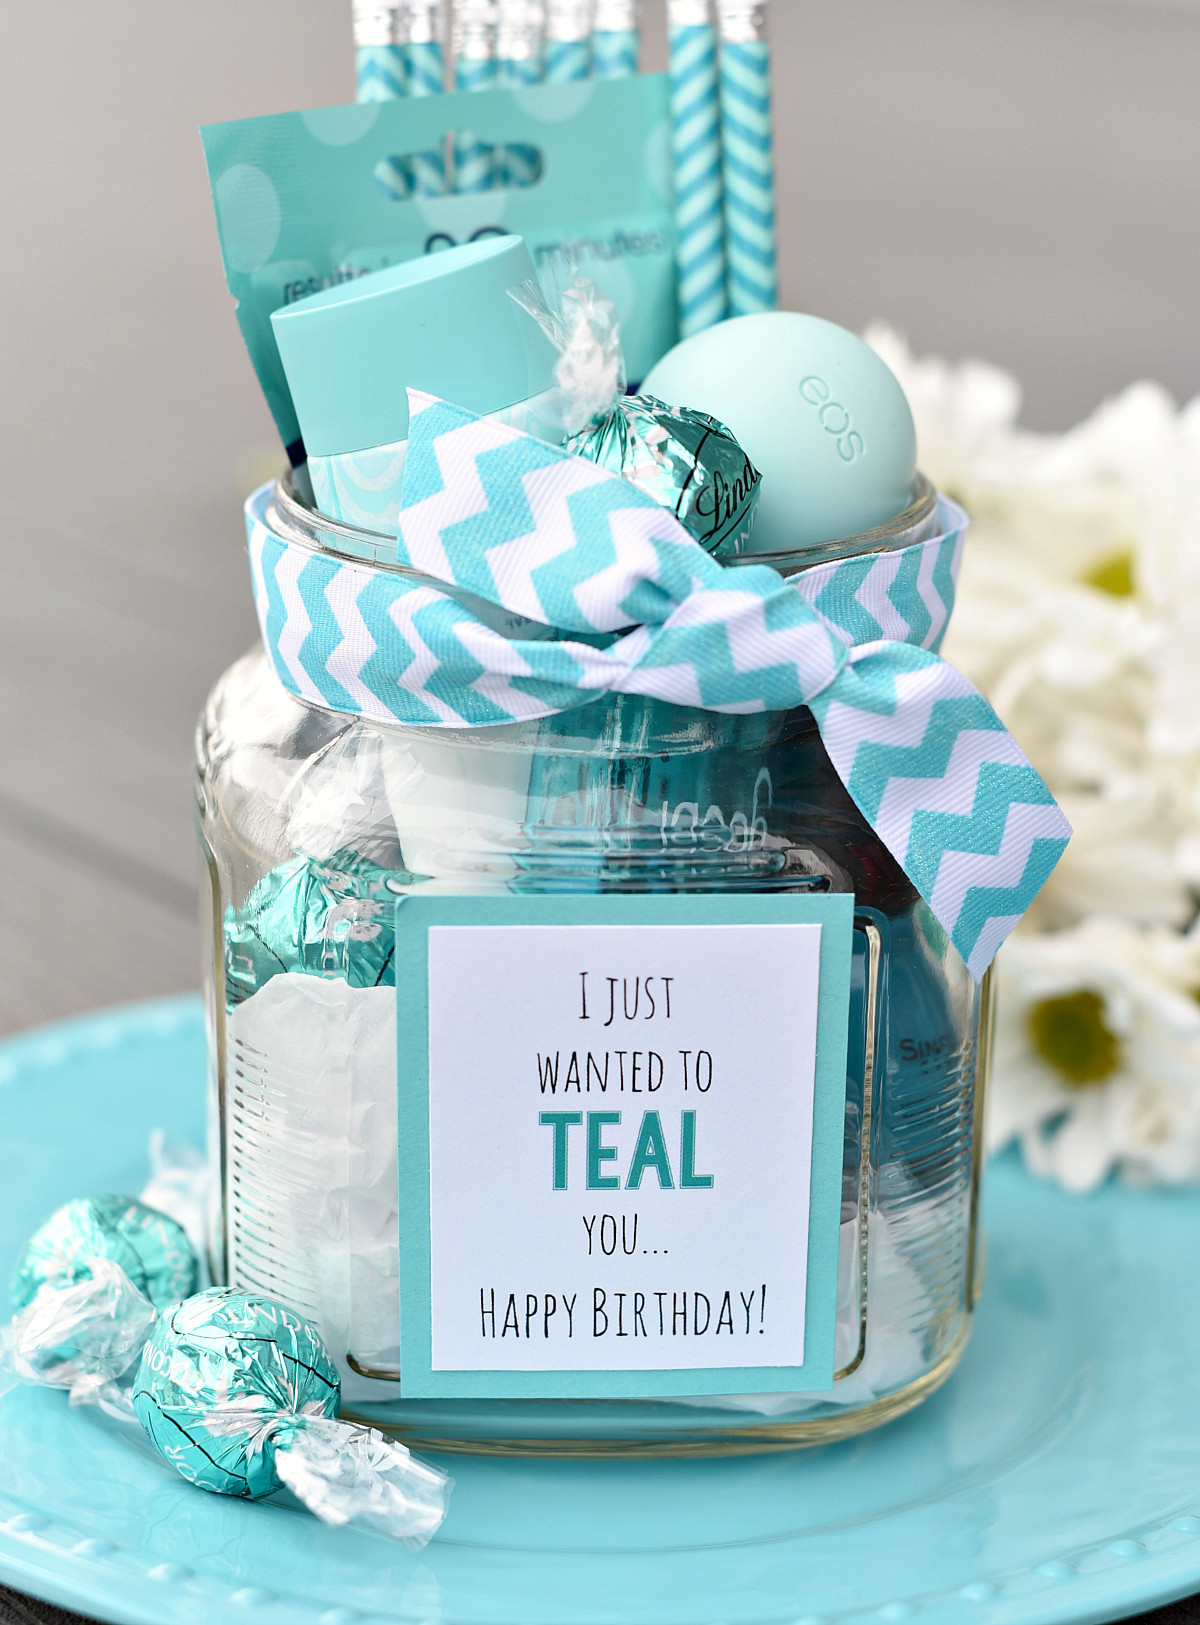 Best Friend Birthday Gift Basket Ideas
 Teal Birthday Gift Idea for Friends – Fun Squared